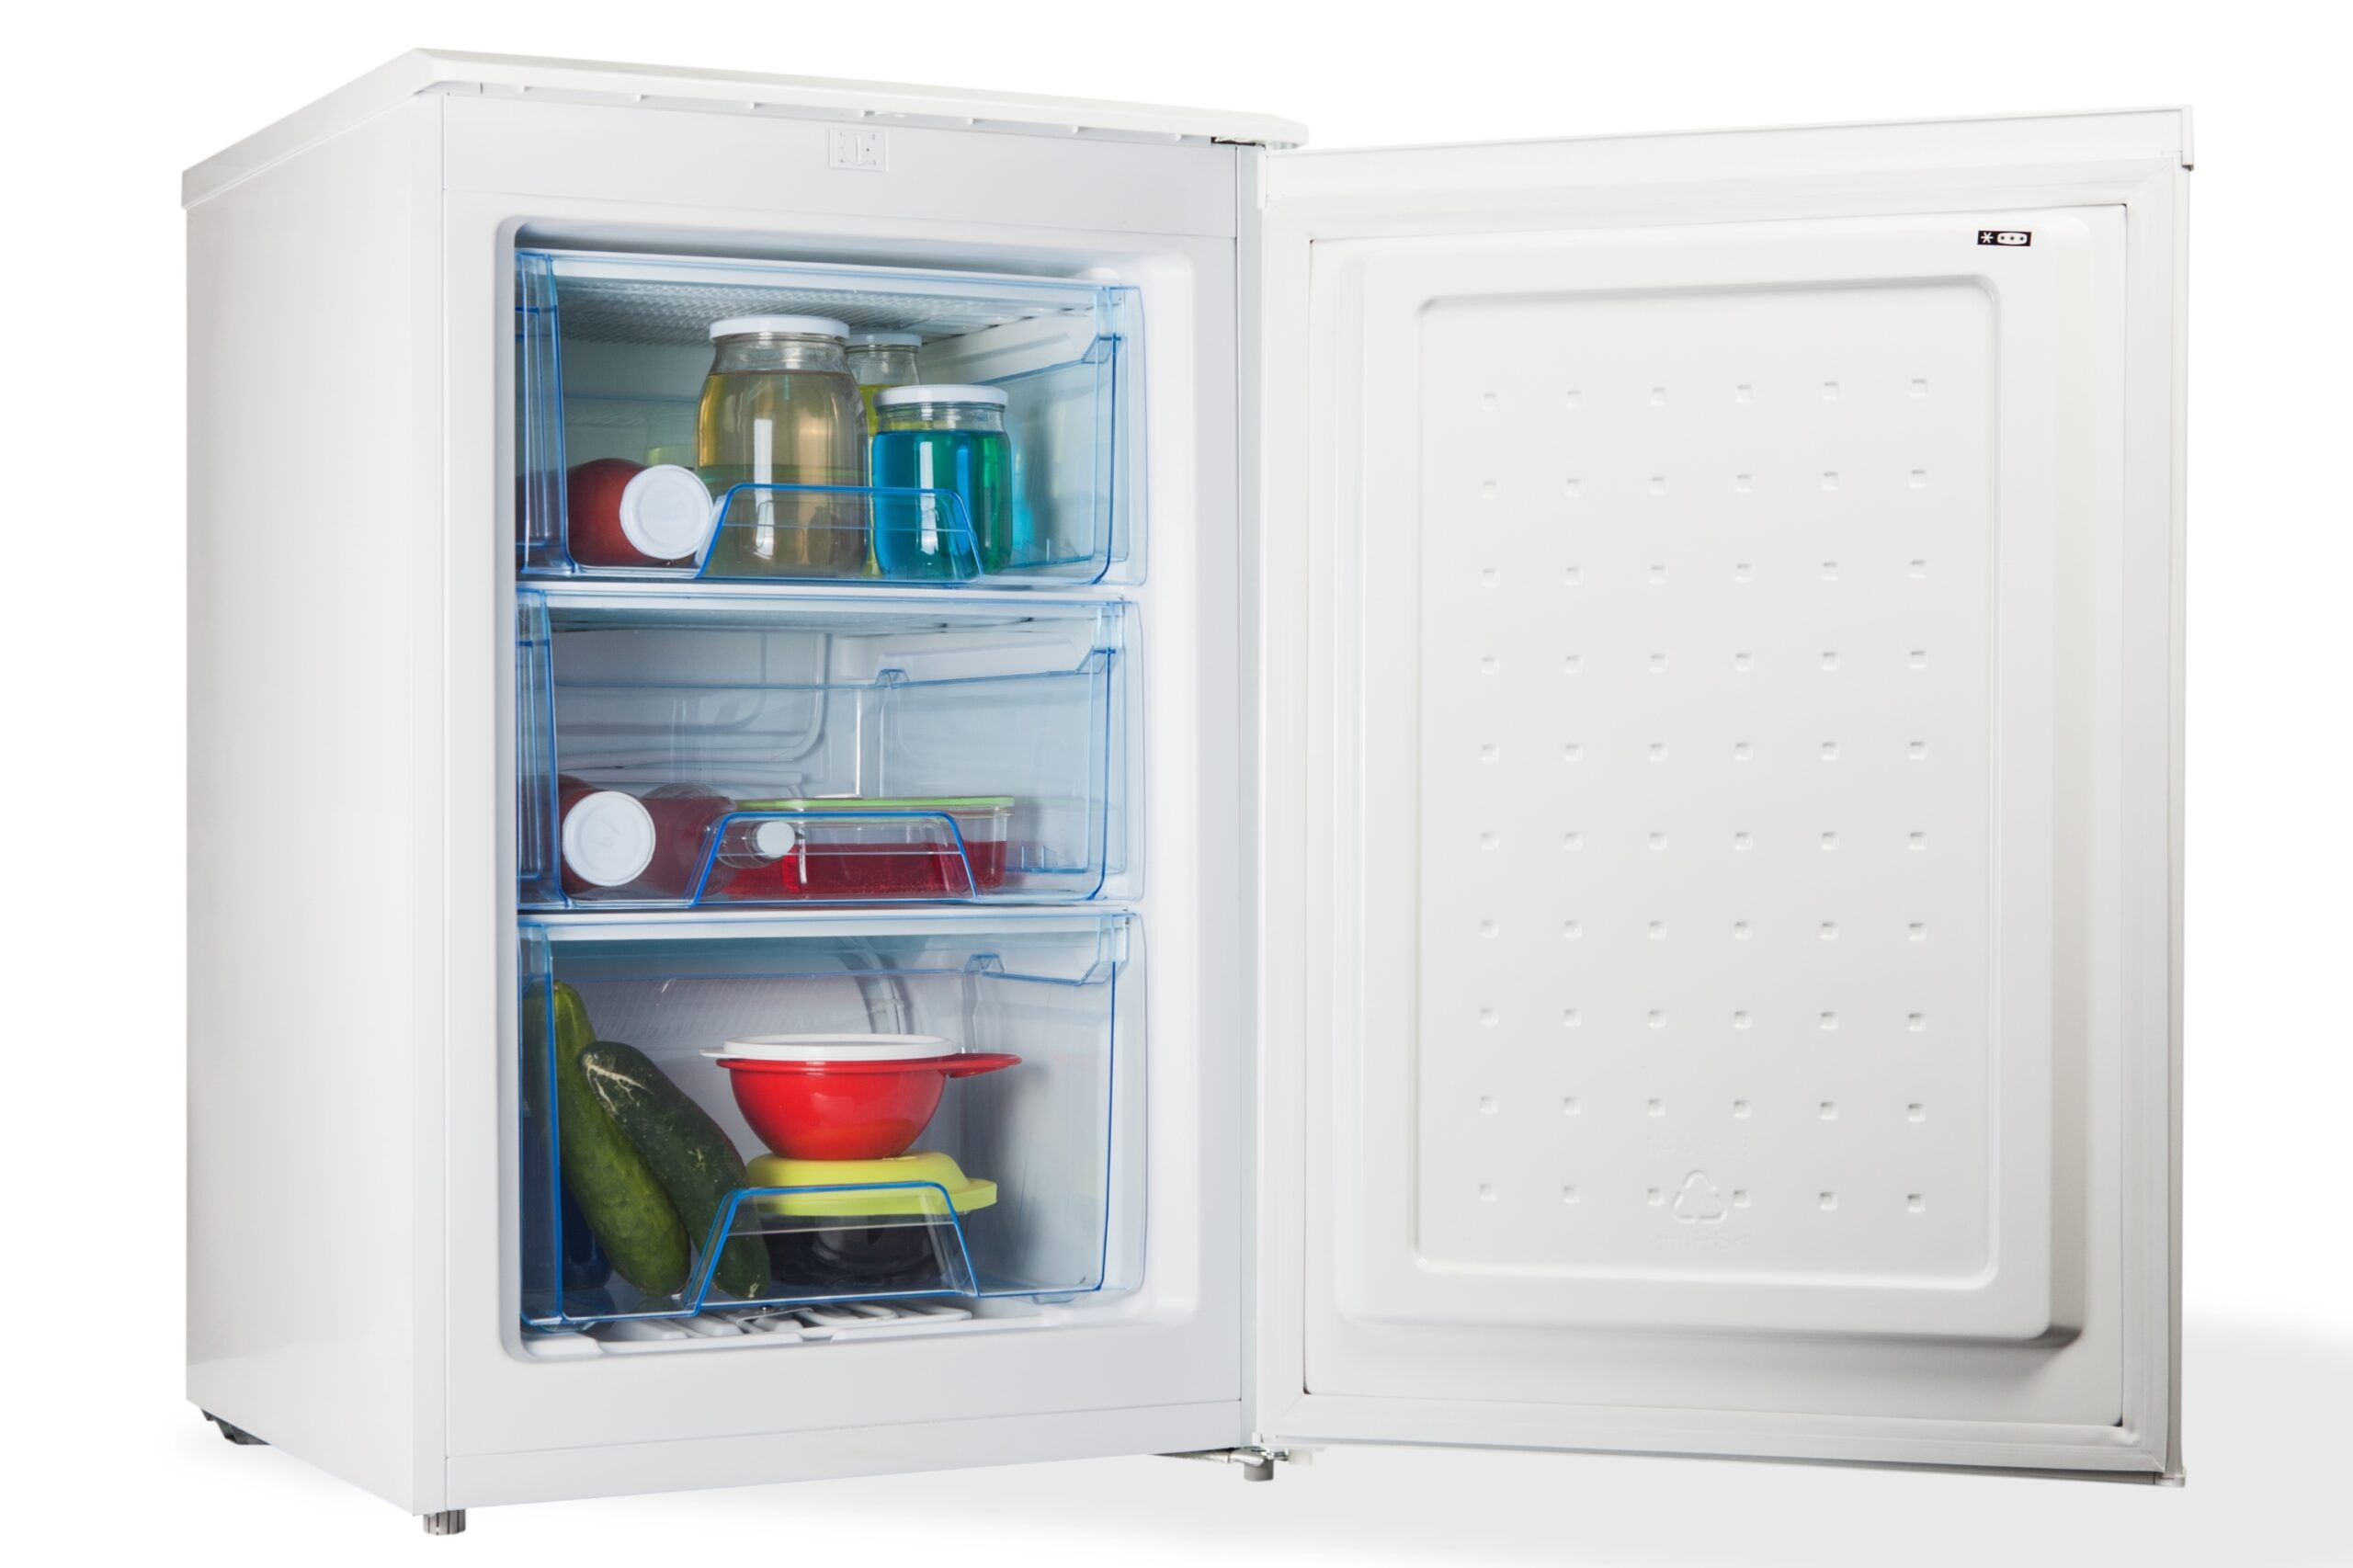 PremierTech® PremierTech PT-FR86 Freezer Congelatore 88 litri da -24° gradi 4**** Stelle Classe E